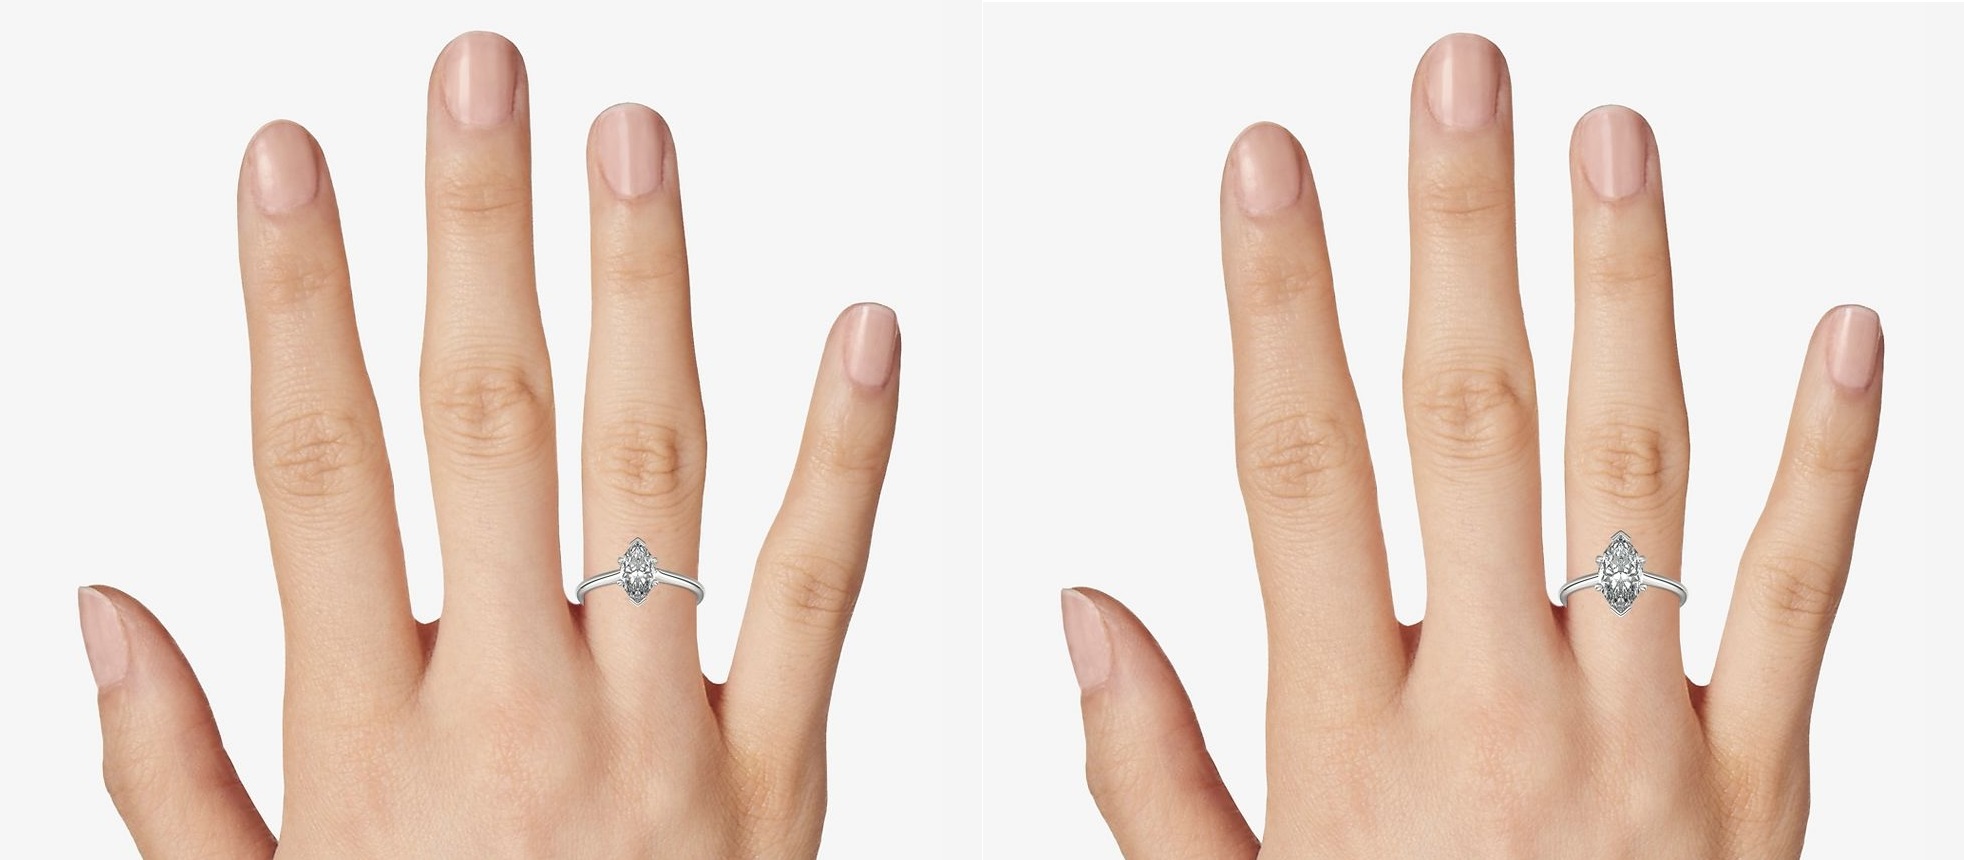 1 carat marquise diamond ring vs 2 carat marquise diamond ring